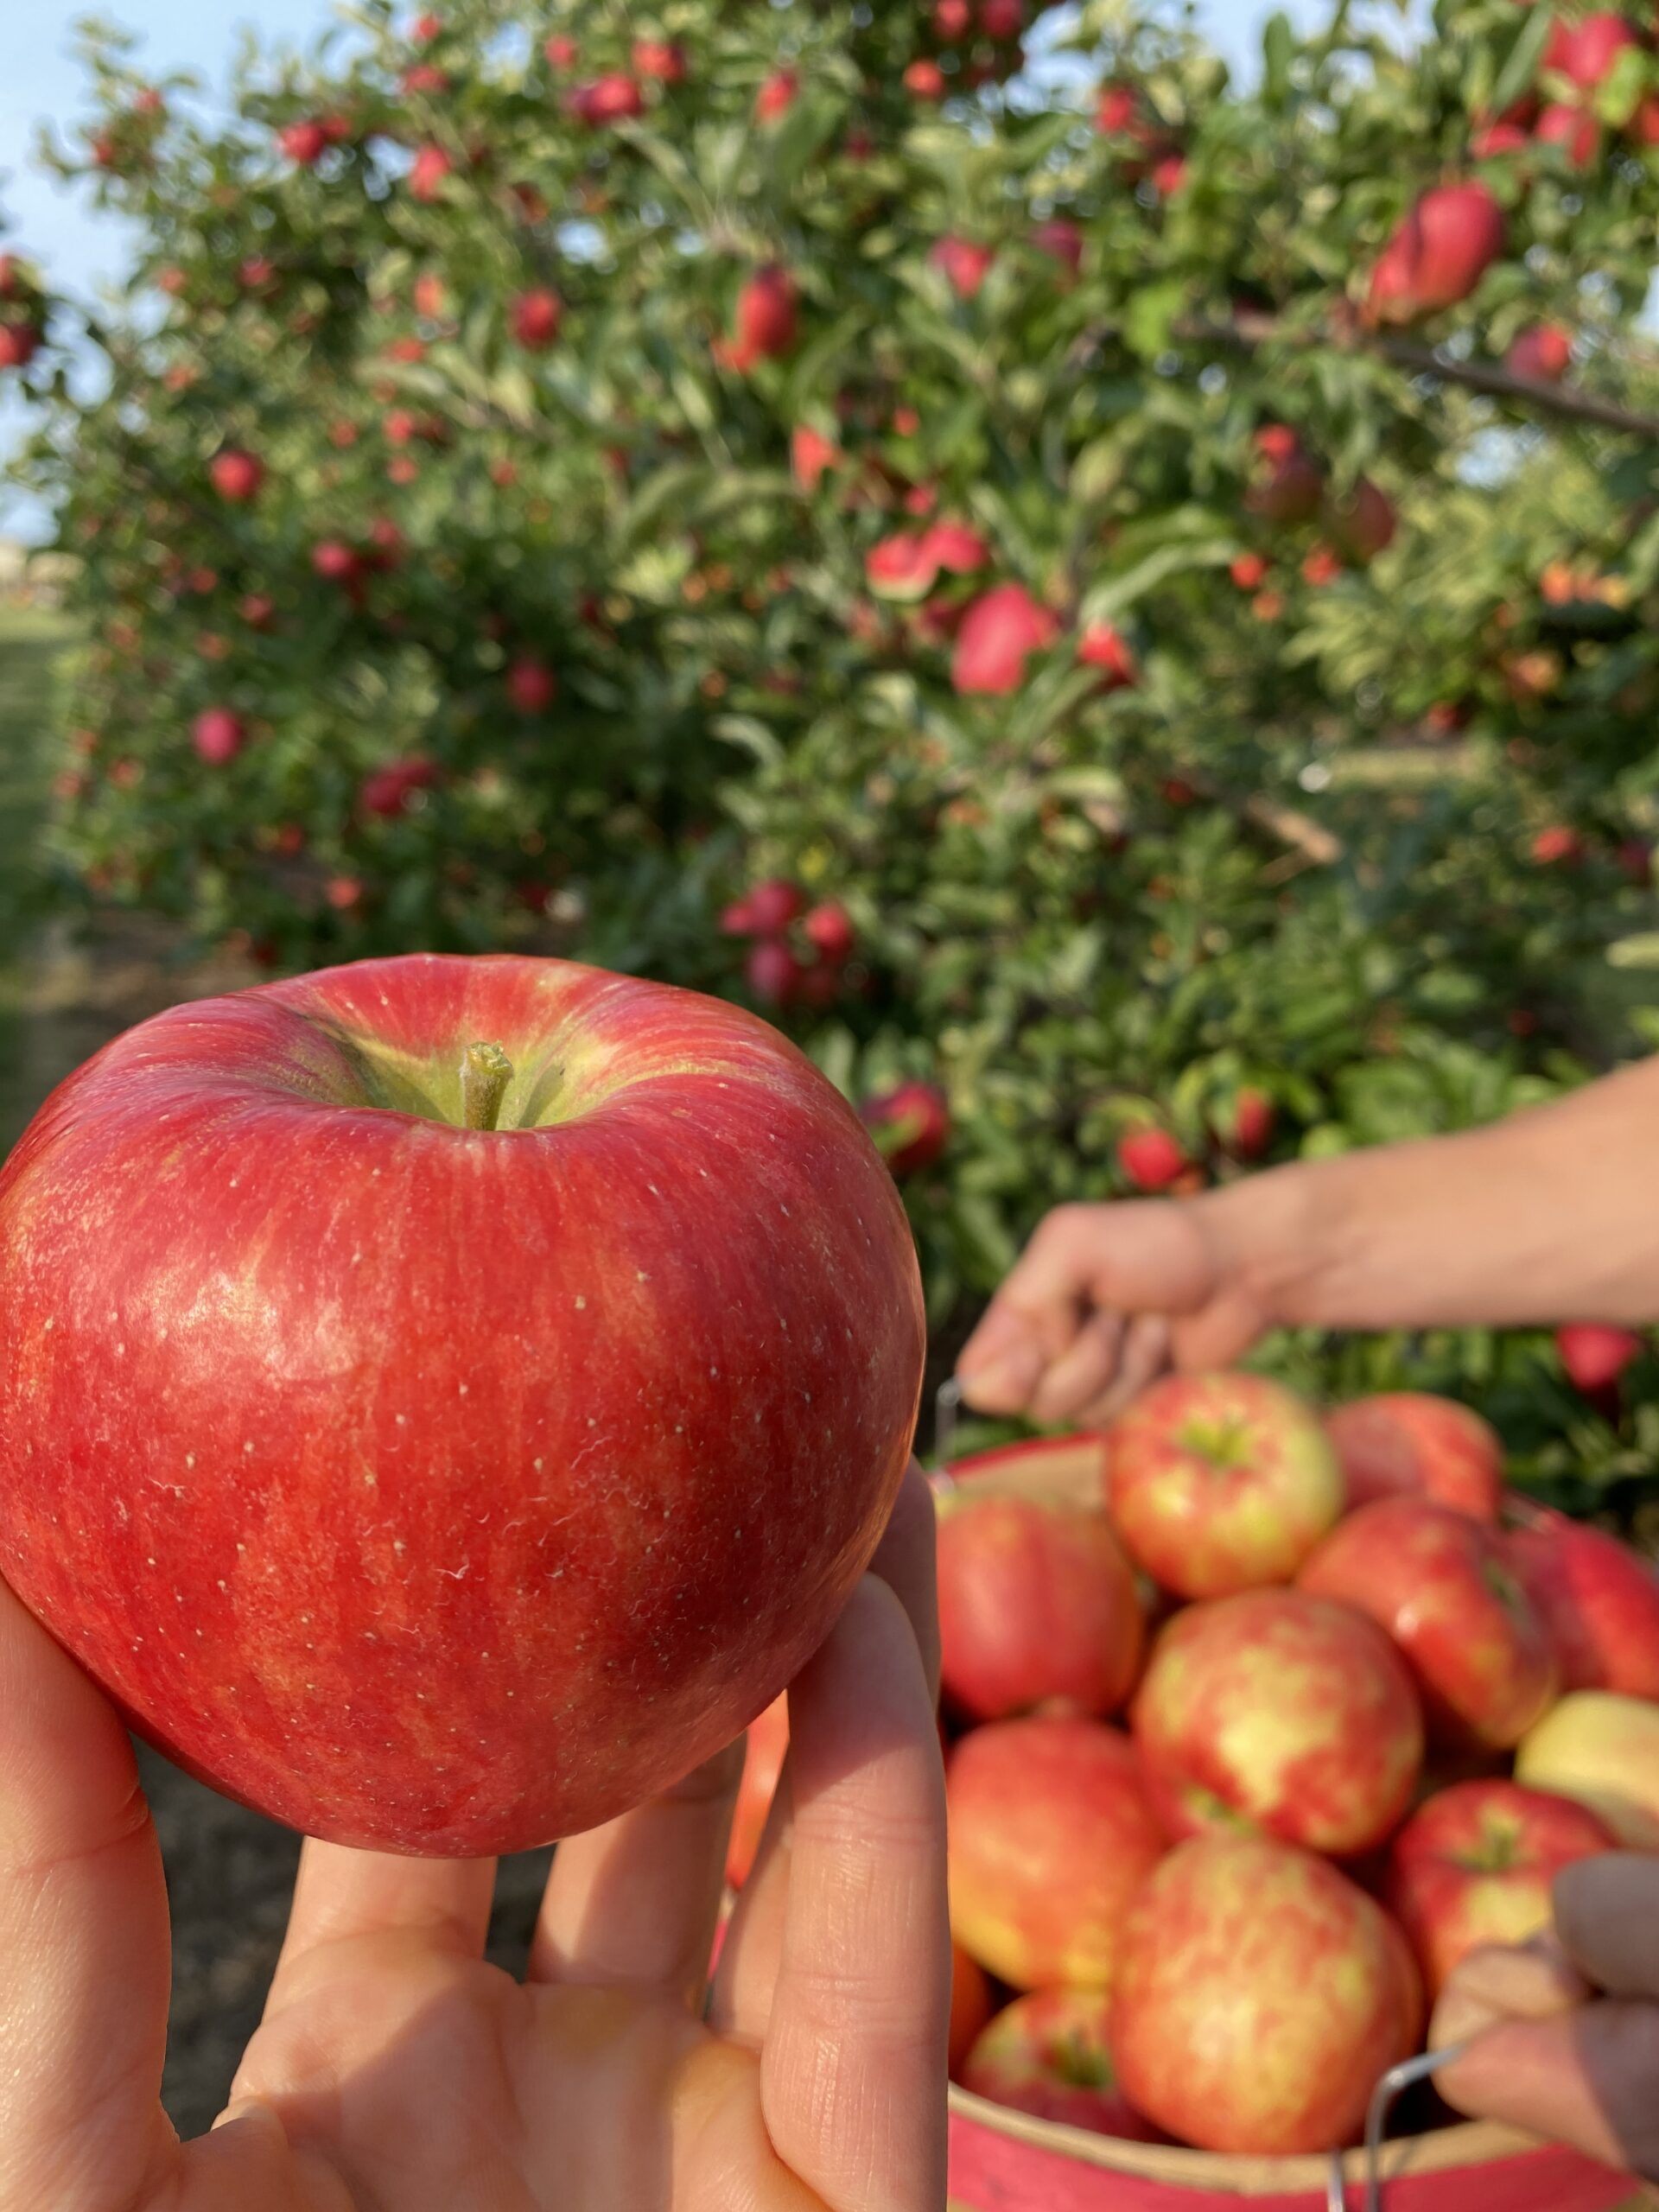 Honeycrisp Apple Box - Fresh Michigan-Grown Apples Delivered